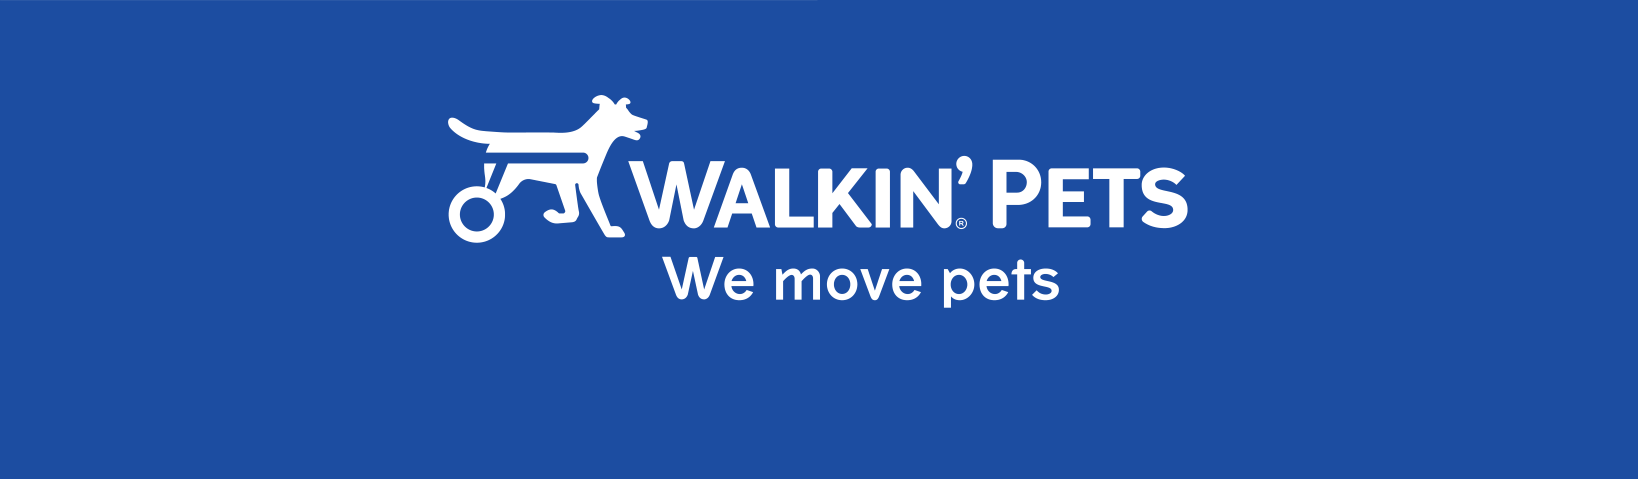 Meet our mobility brand, Walkin’ Pets